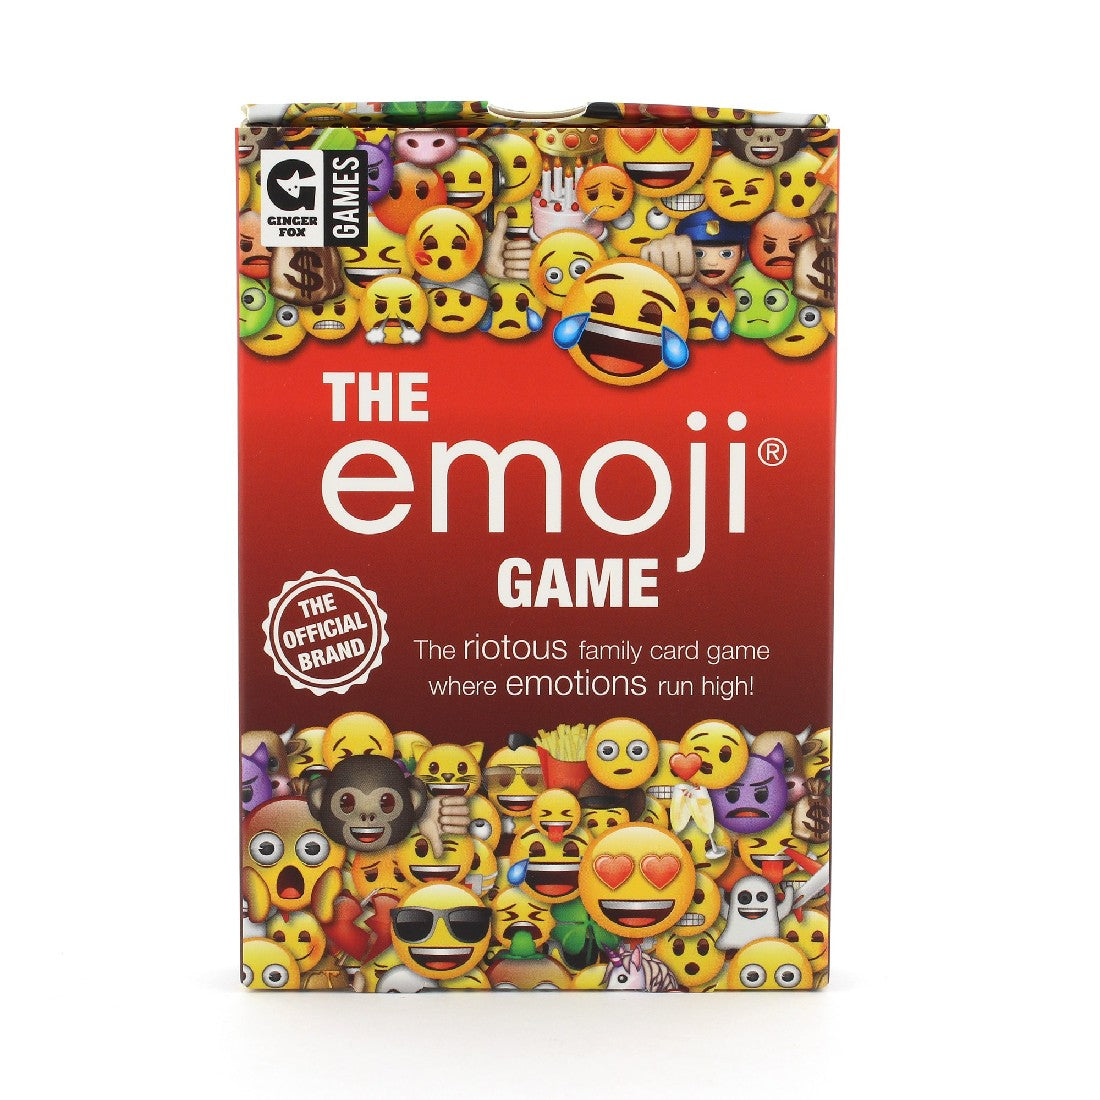 THE EMOJI GAME